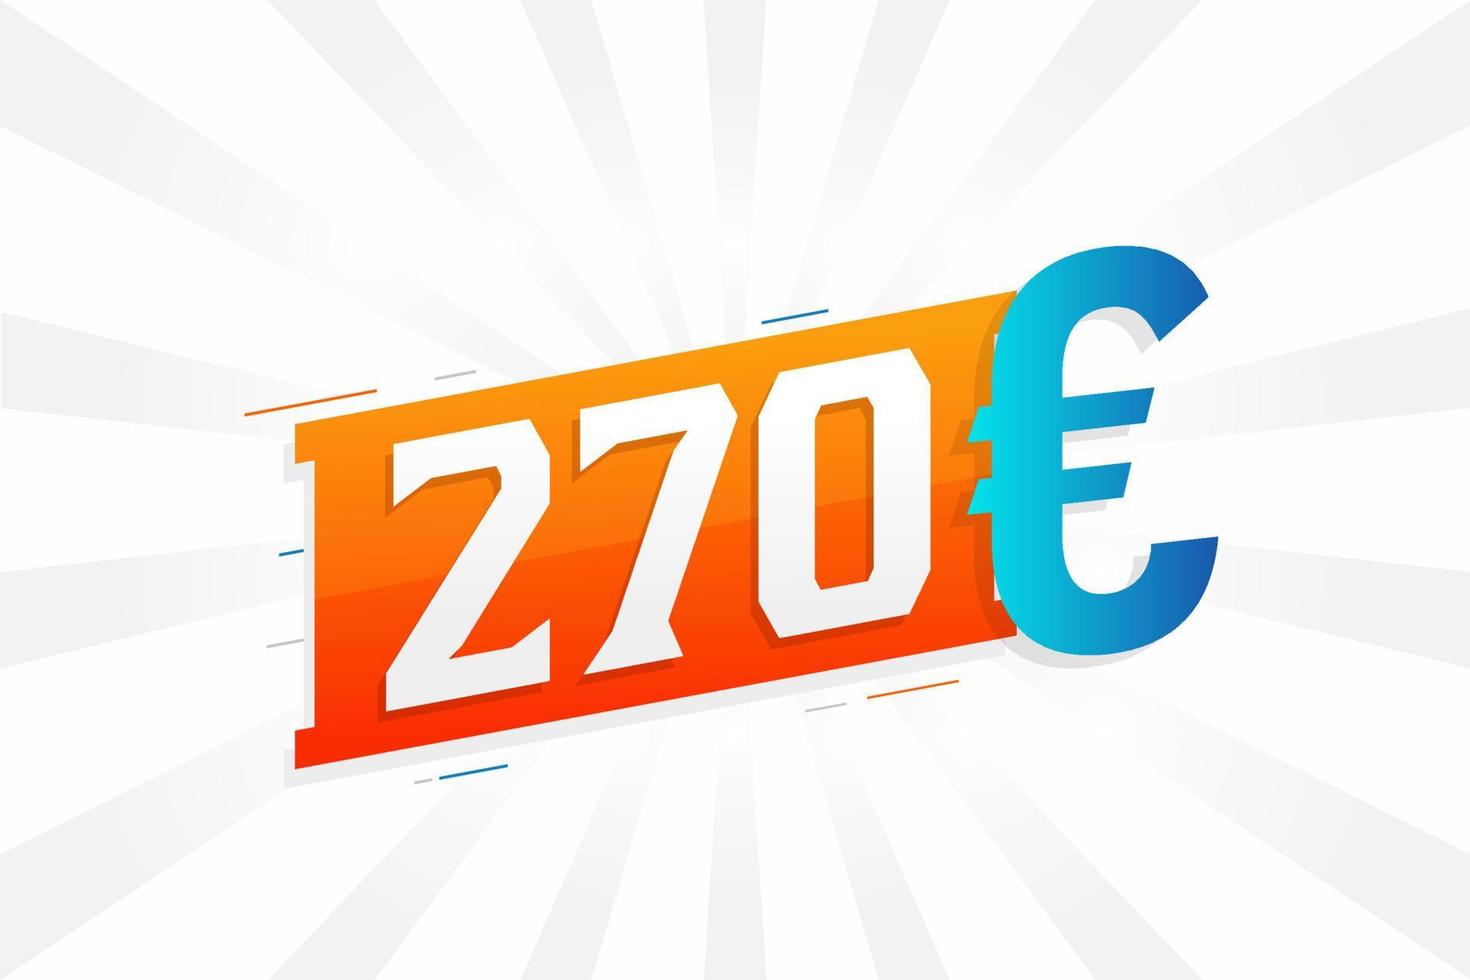 Símbolo de texto vectorial de moneda de 270 euros. 270 euros vector de stock de dinero de la unión europea